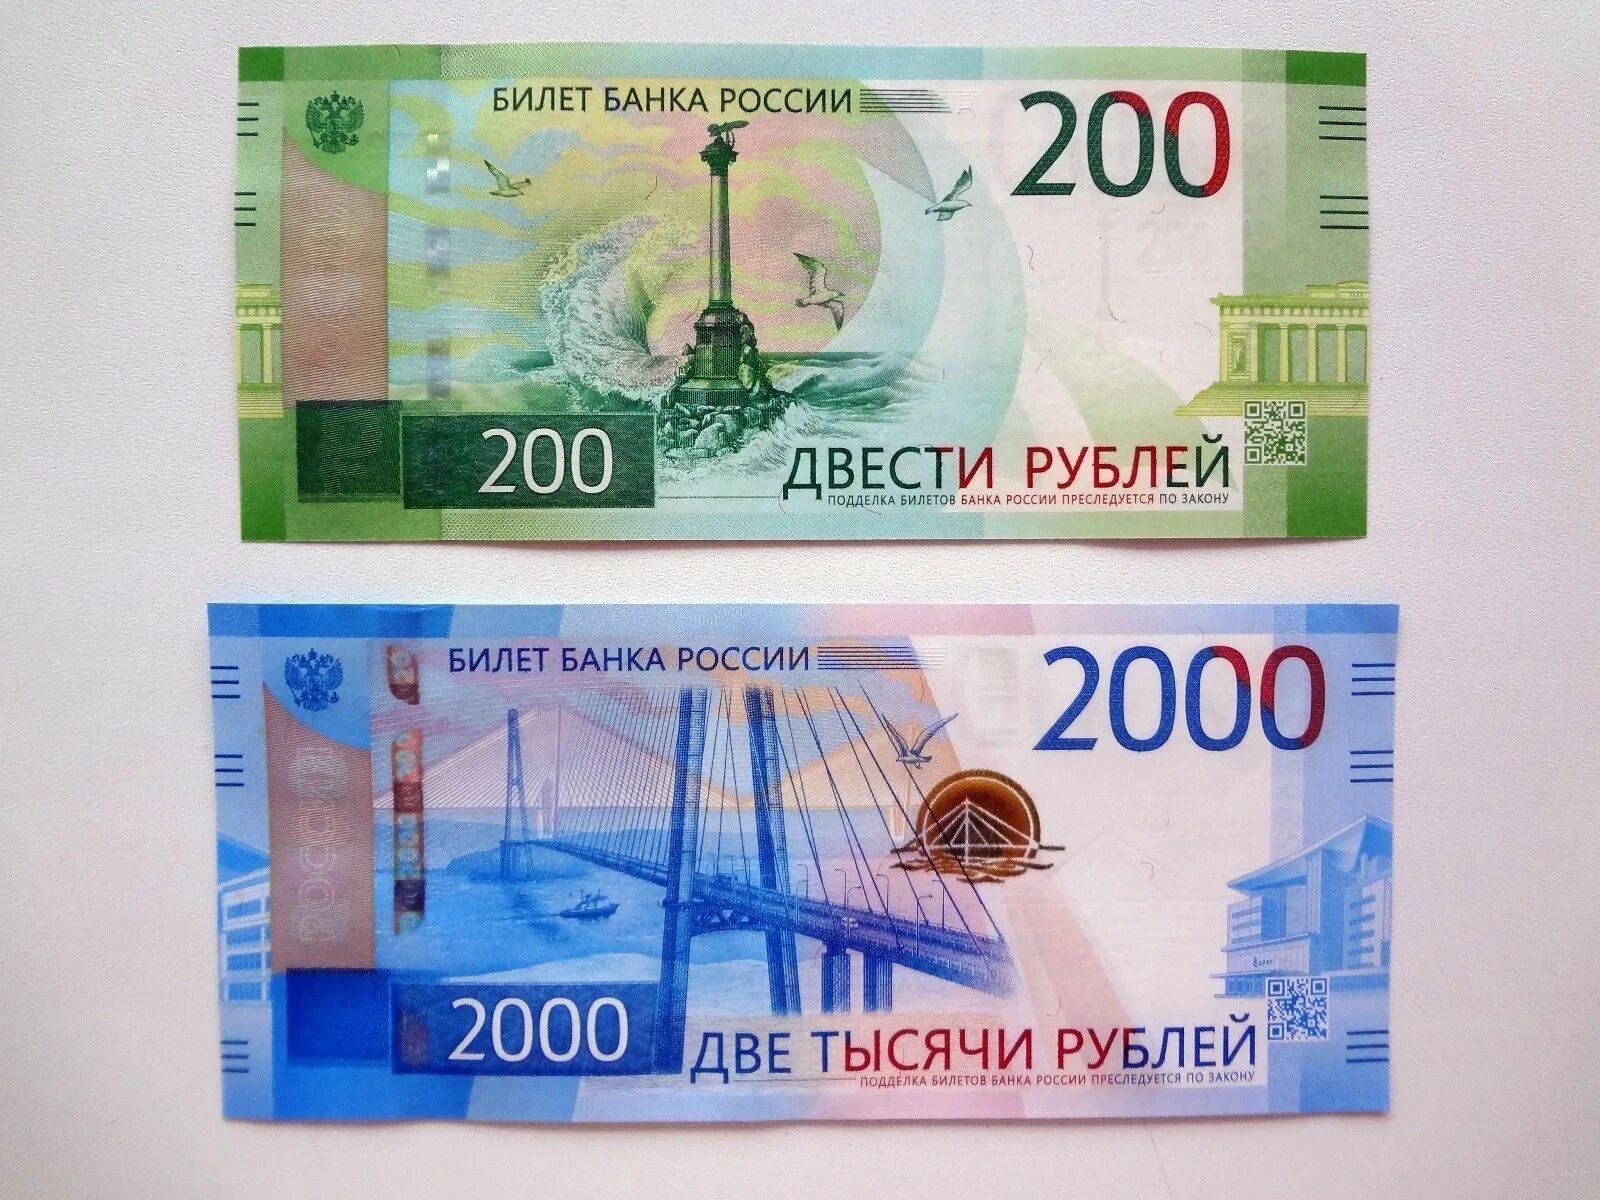 Билет банка России 2000 рублей. Купюра 200 рублей. 200 И 2000 рублей. Купюры 200 и 2000.